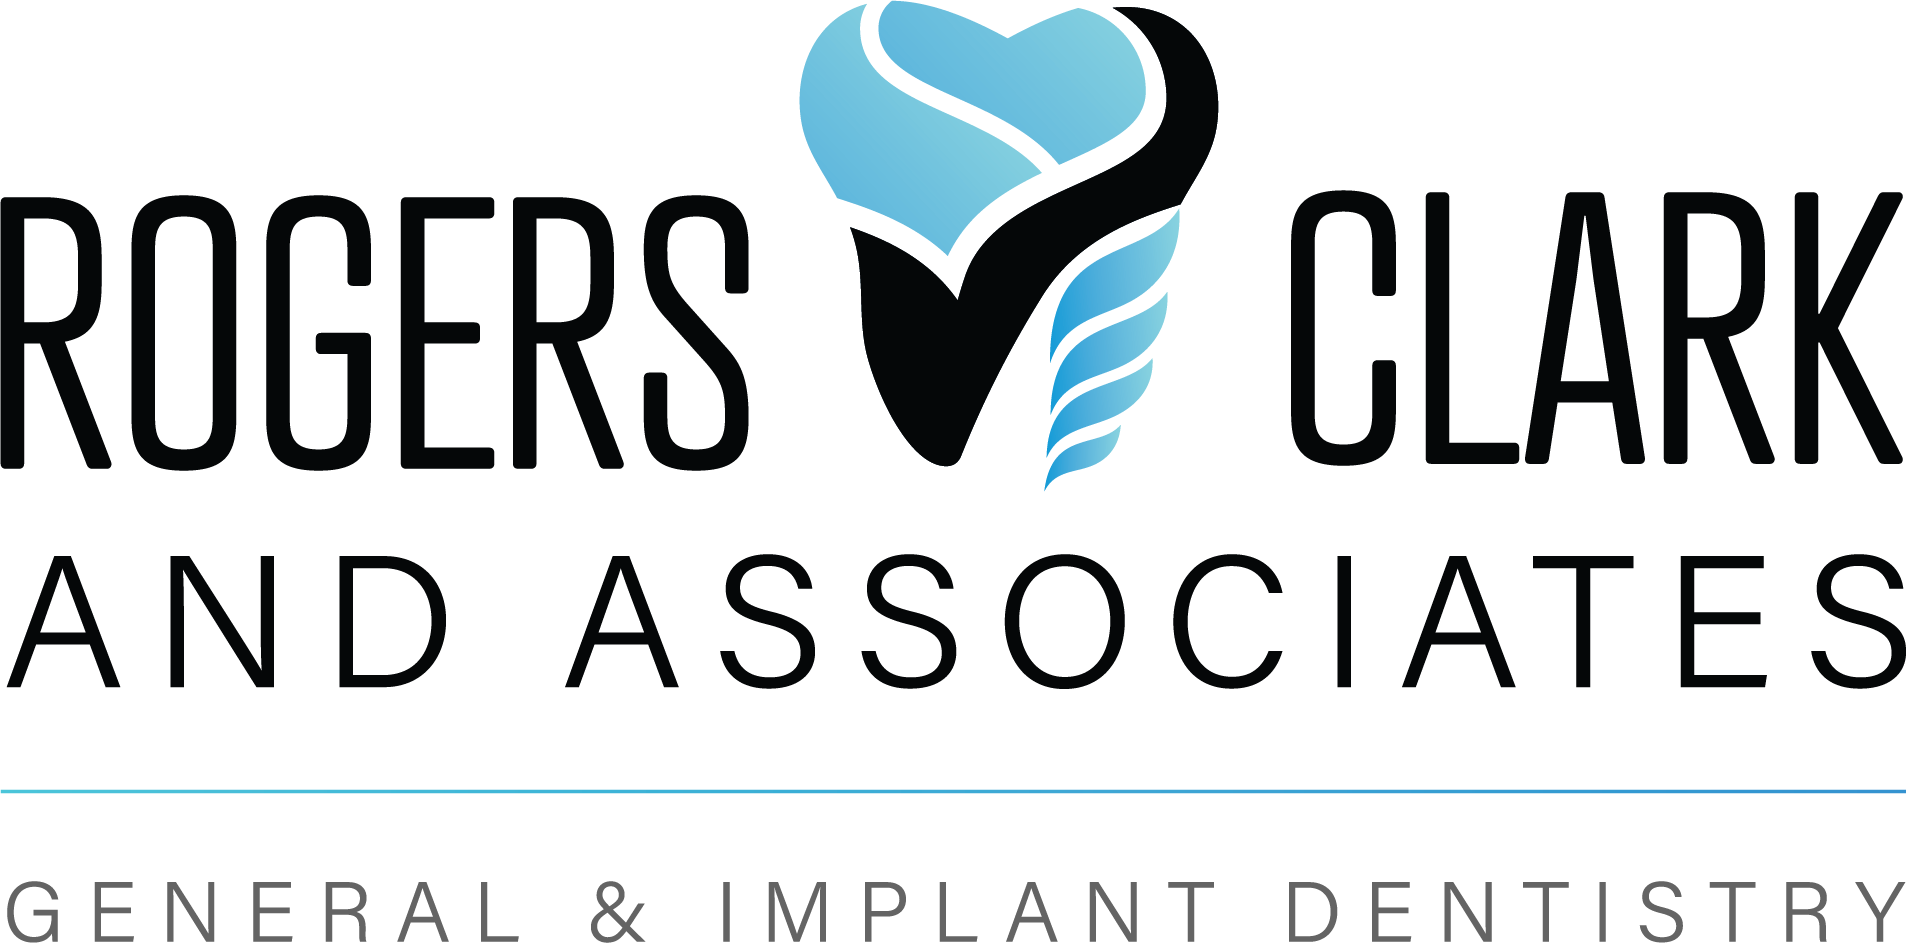 rogers-clark-dental Logo